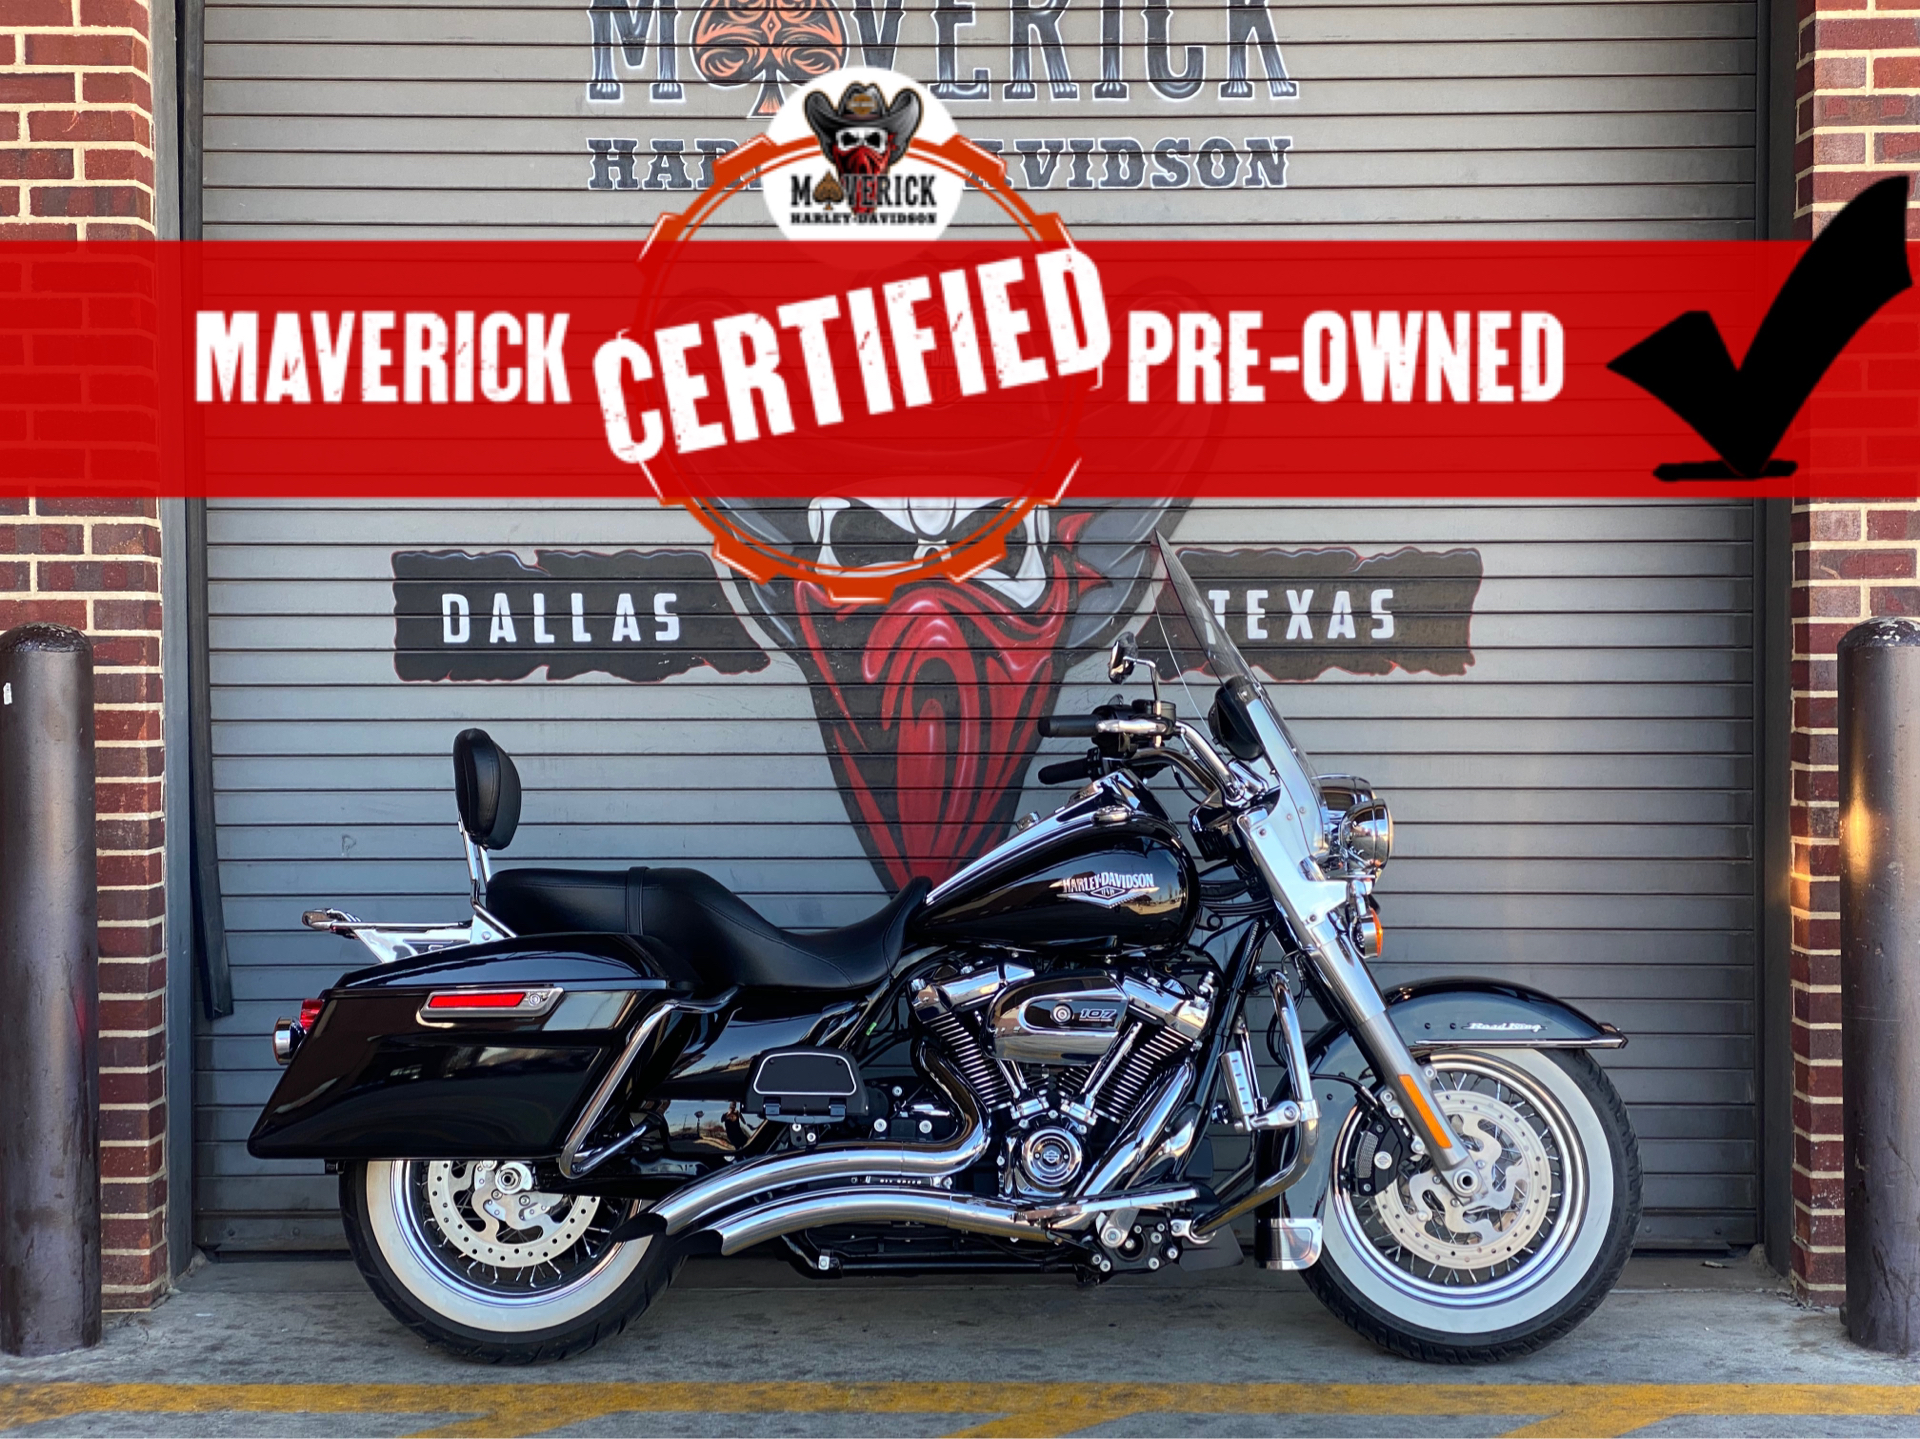 2019 Harley-Davidson Road King® in Carrollton, Texas - Photo 1